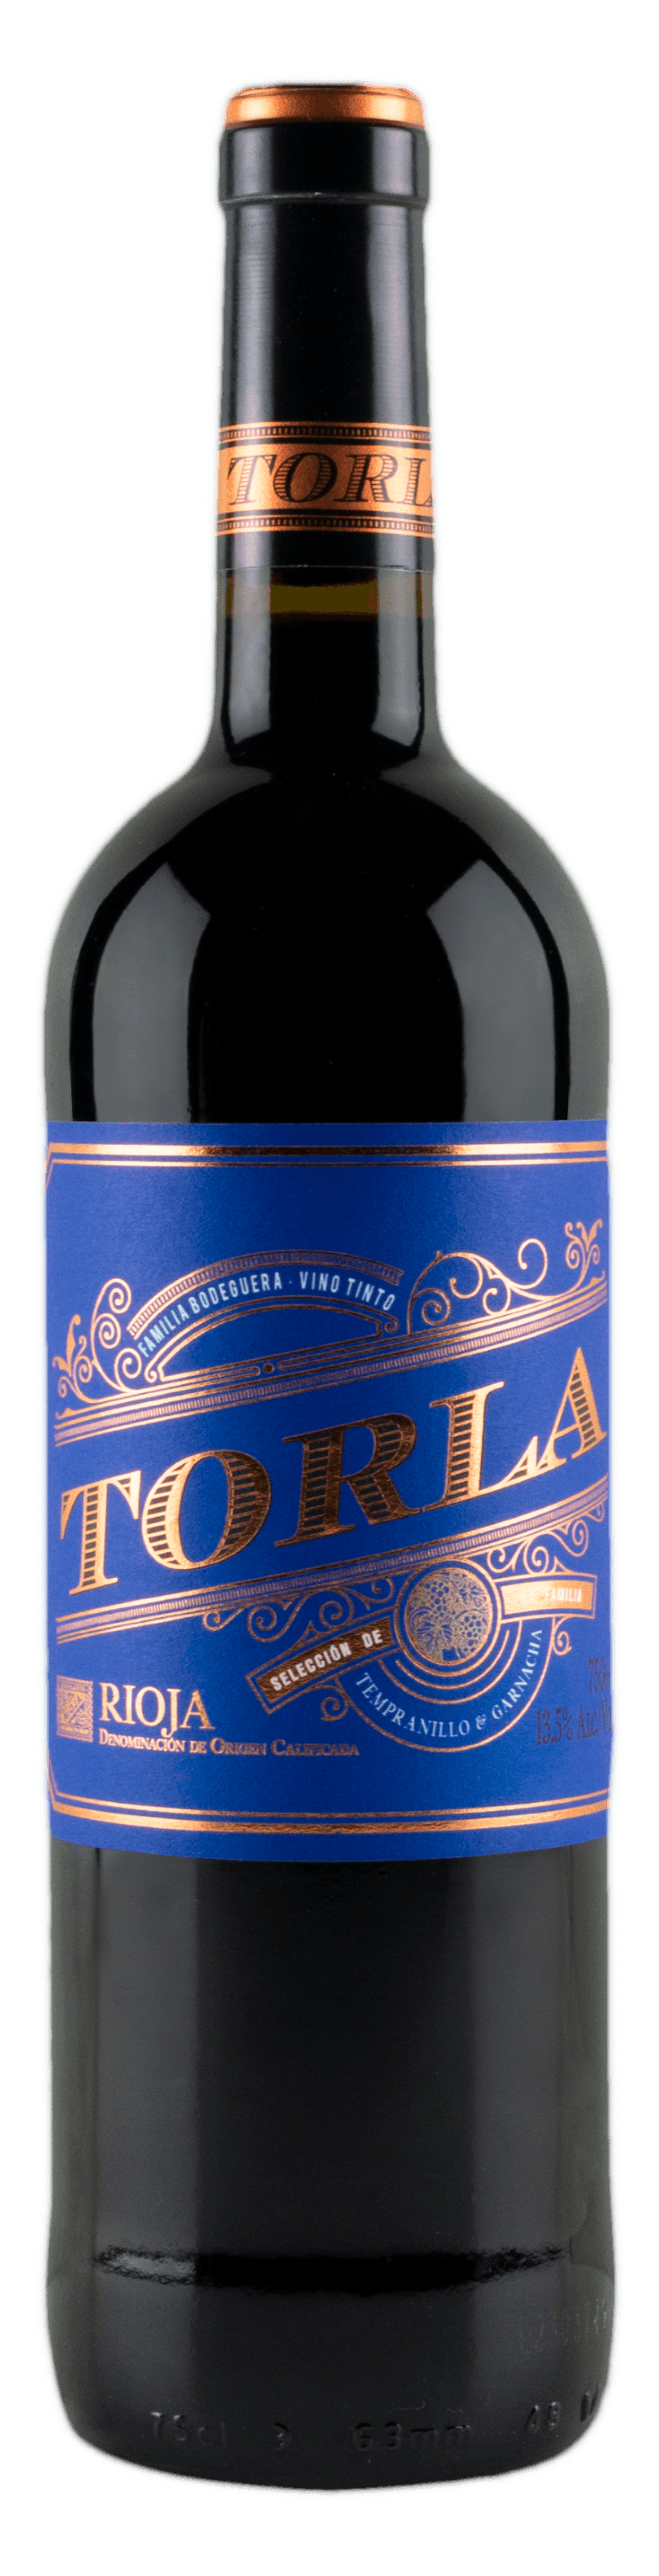 Vino Tinto Español Torla D.O.Ca. Rioja Tempranillo Garnacha - Wine.com.mx